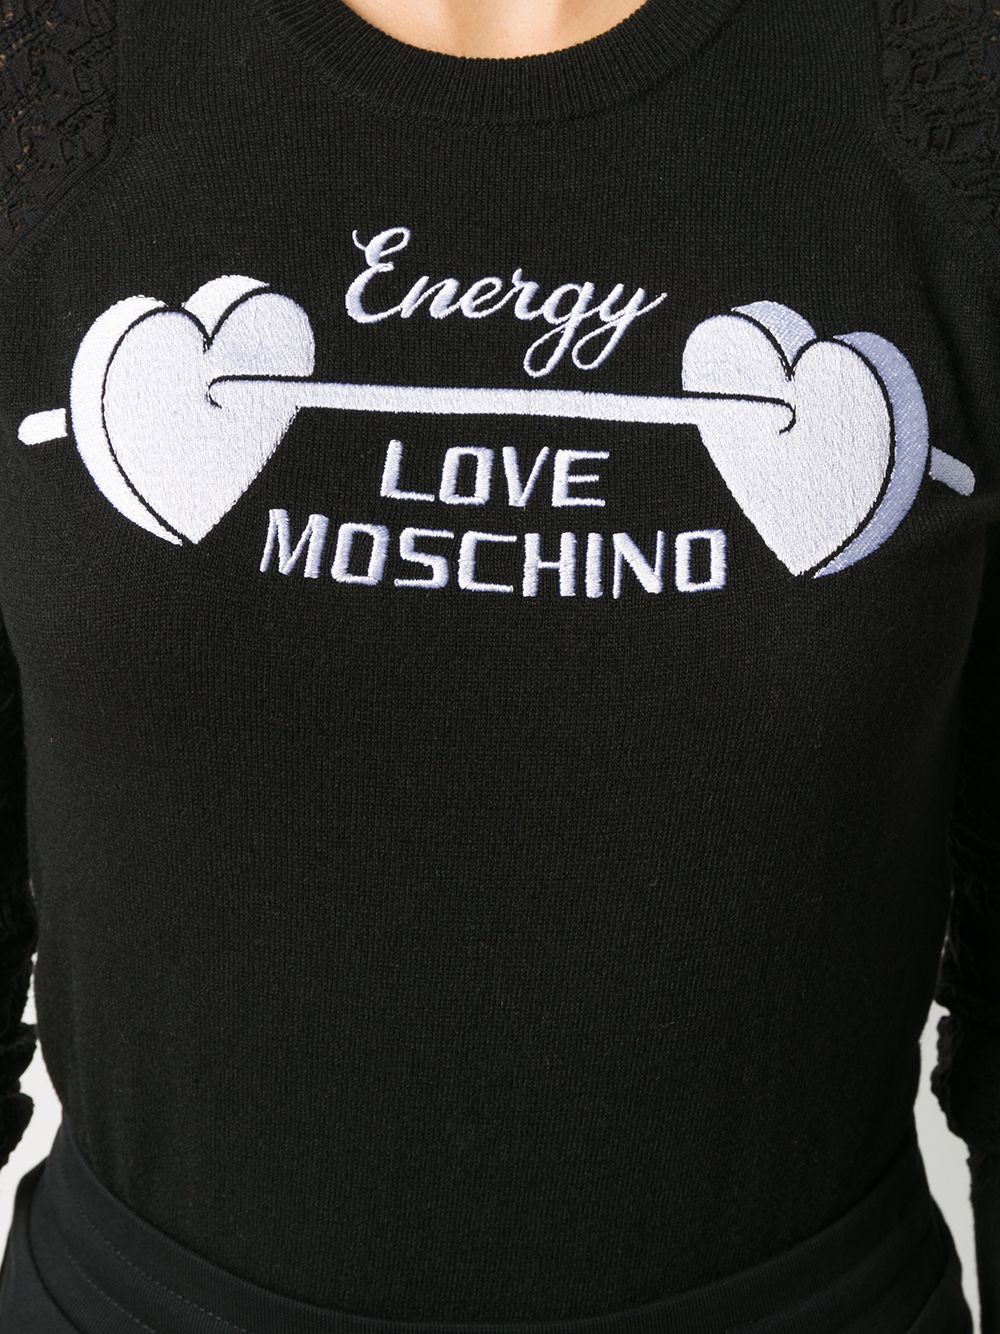 фото Love moschino джемпер с вышитым логотипом и сетчатыми рукавами